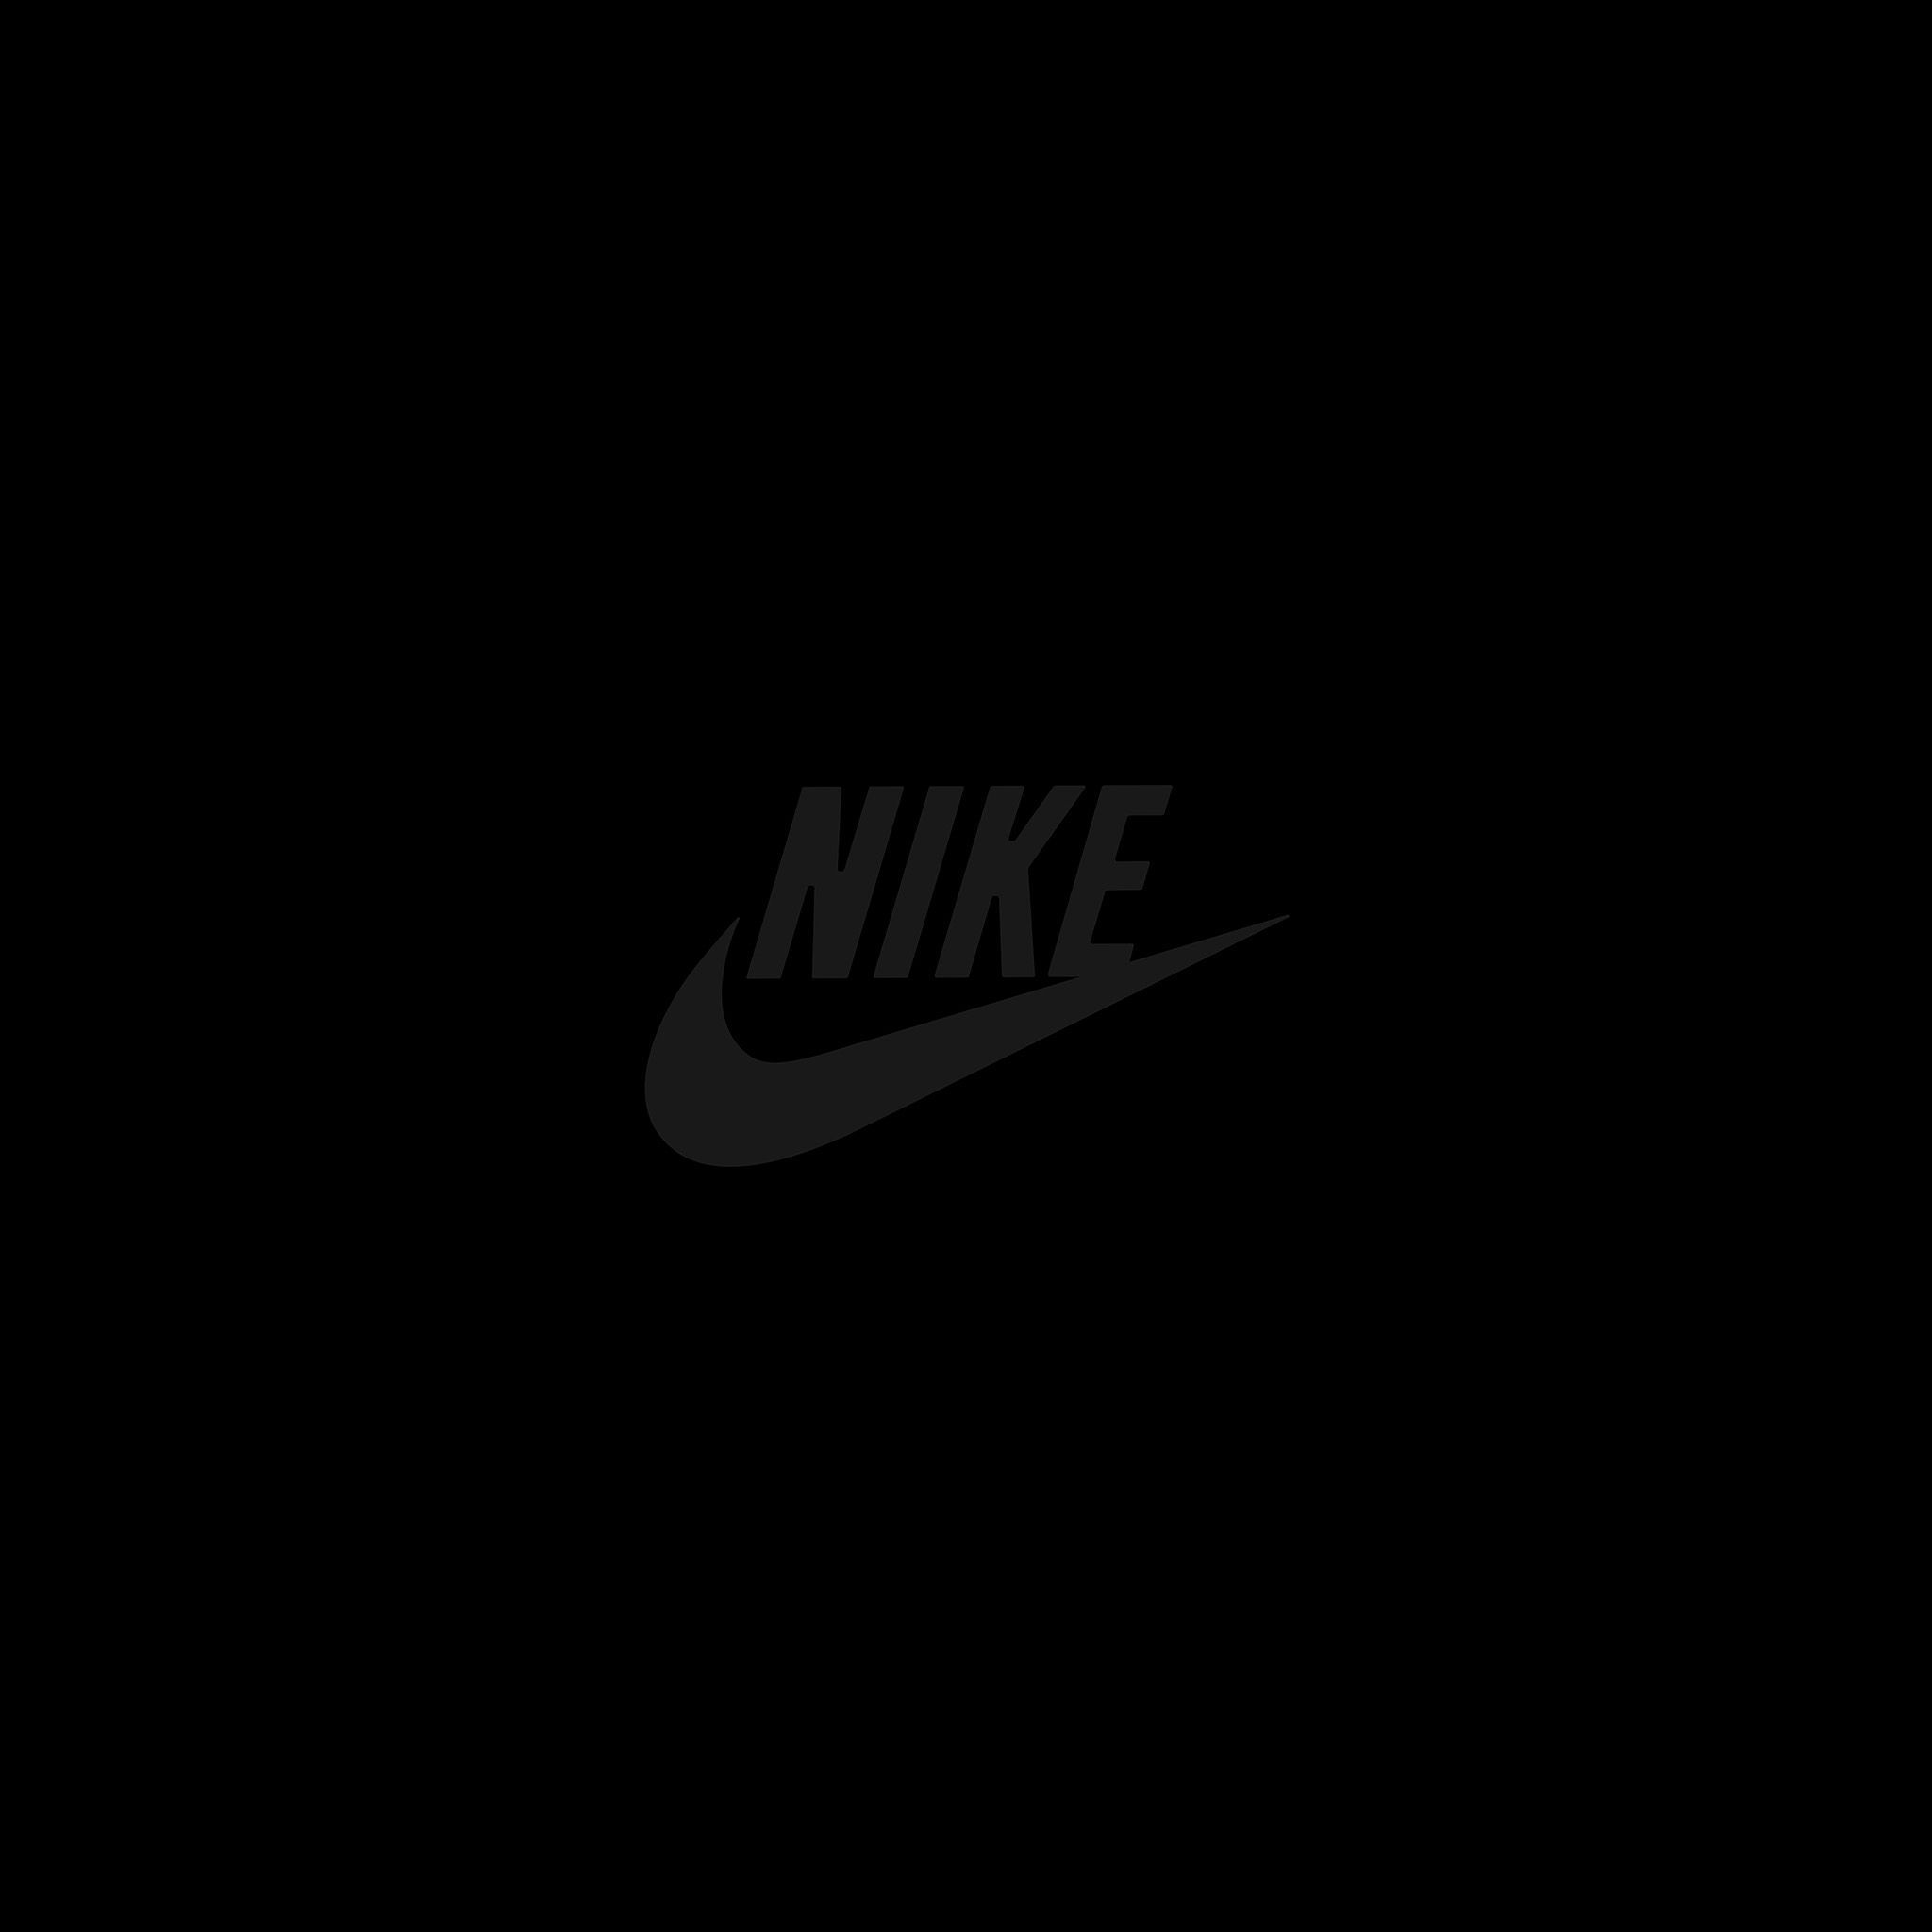  Nike Geile Hintergrundbild 2048x2048. Nike iPad Wallpaper Free Nike iPad Background